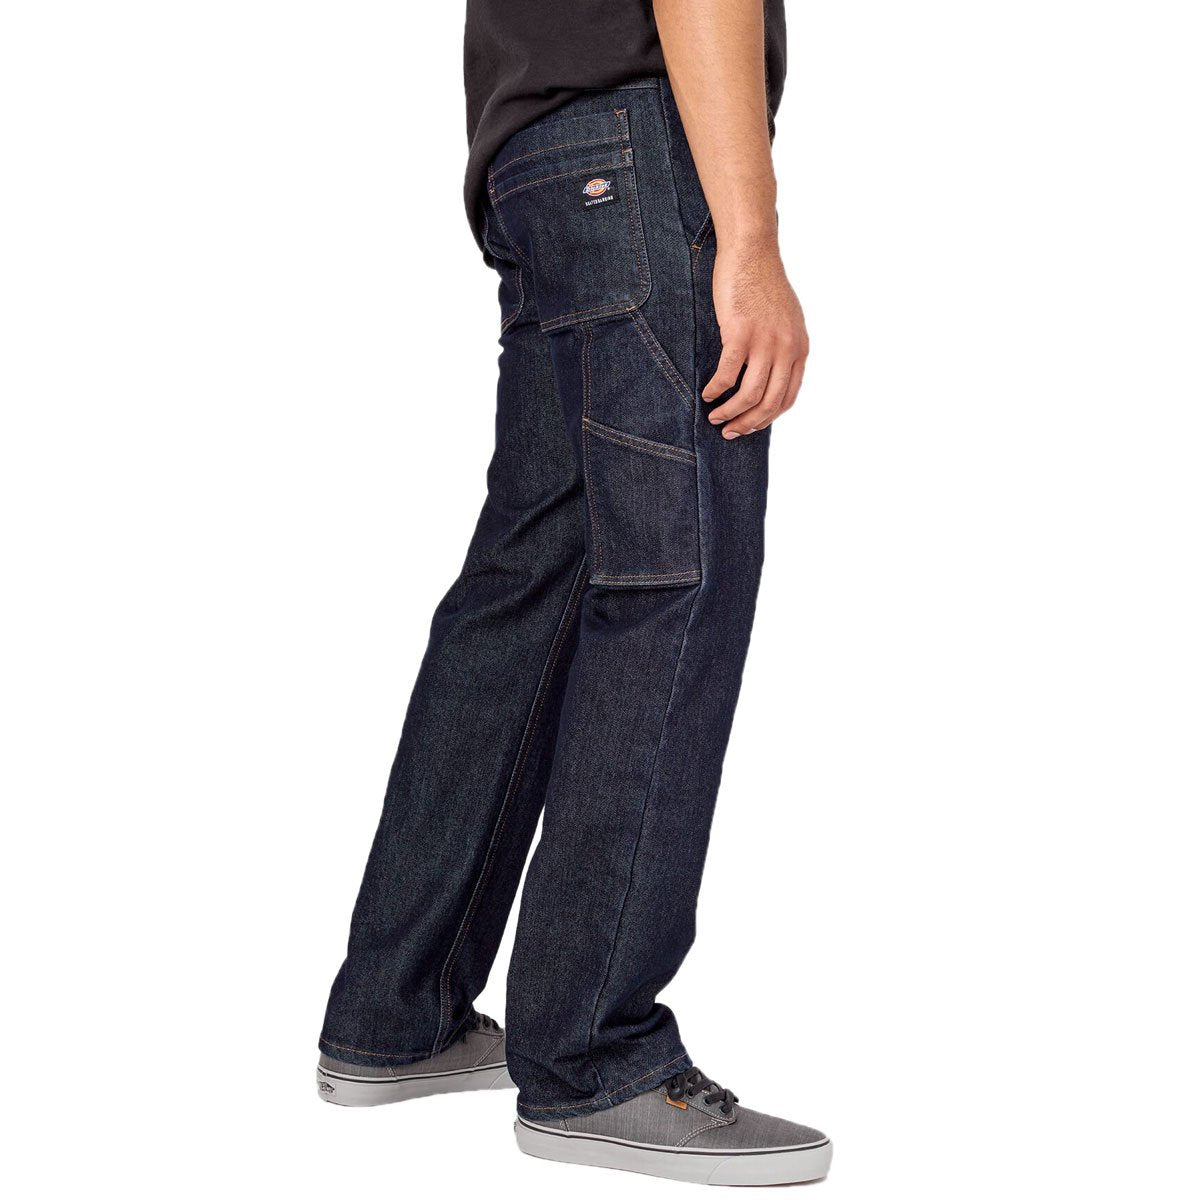 Dickies Denim Utility Jeans - Rinsed Indigo Blue image 3